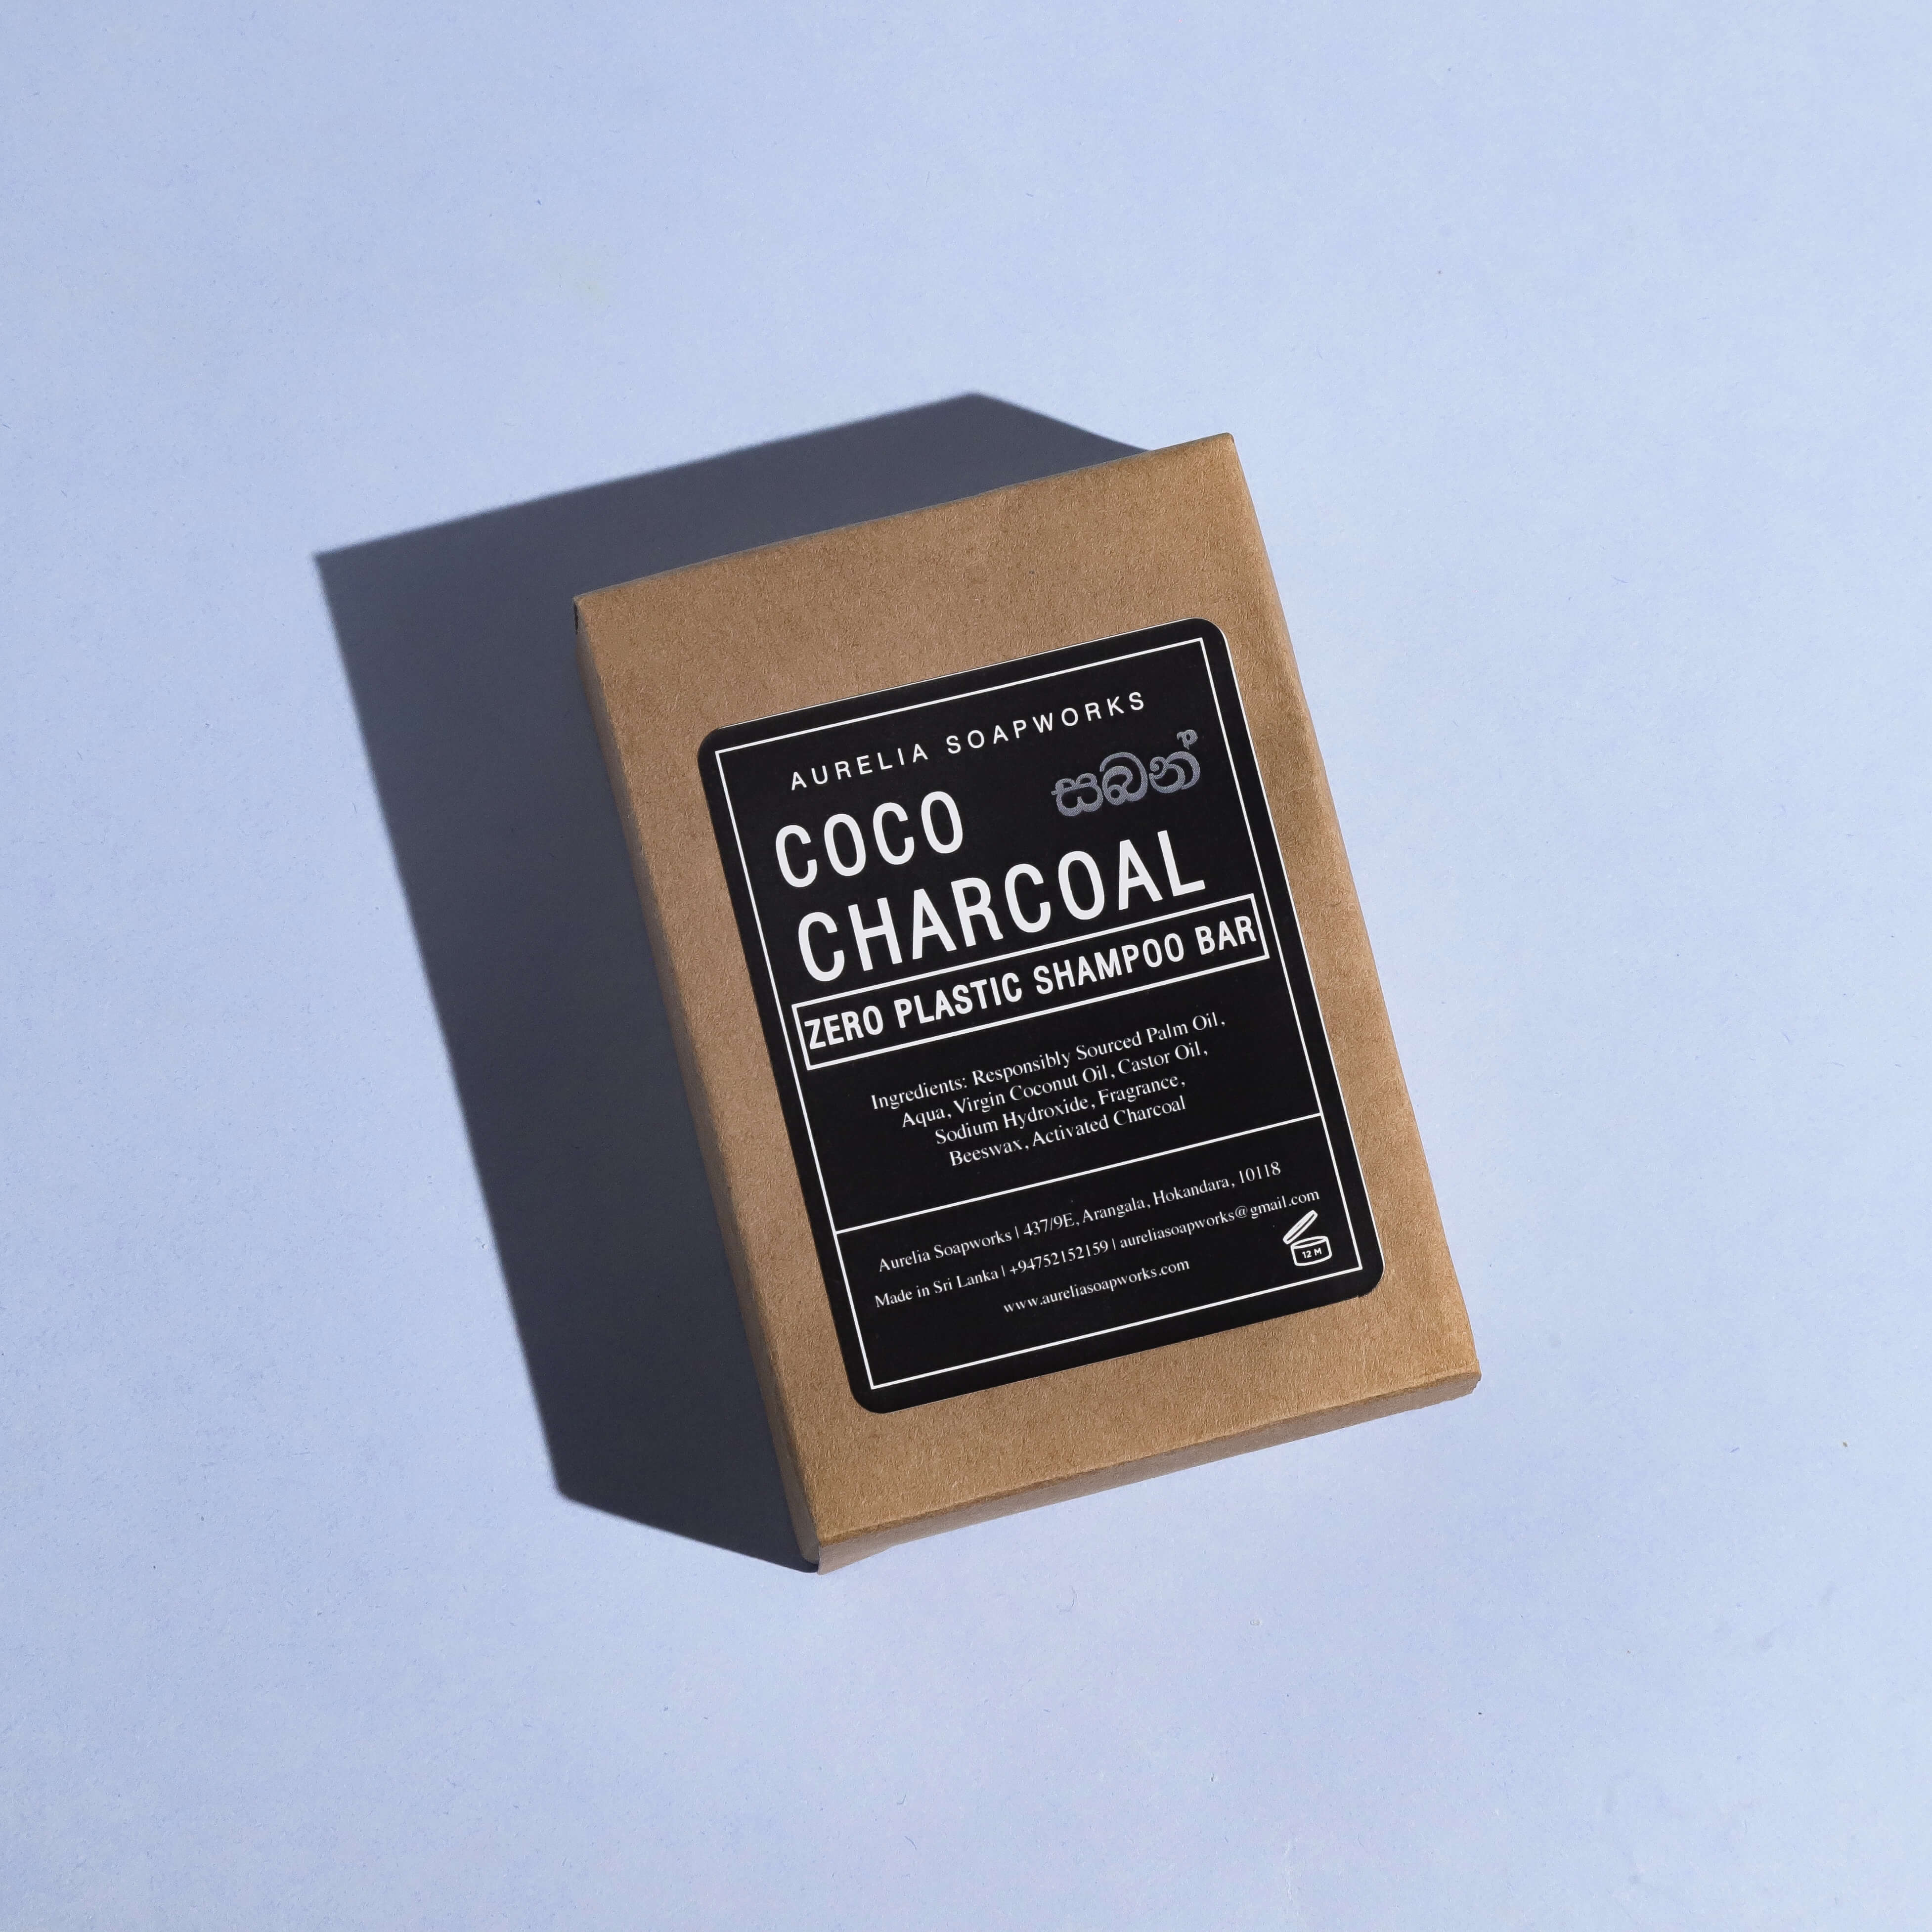 Coco charcoal shampoo bar